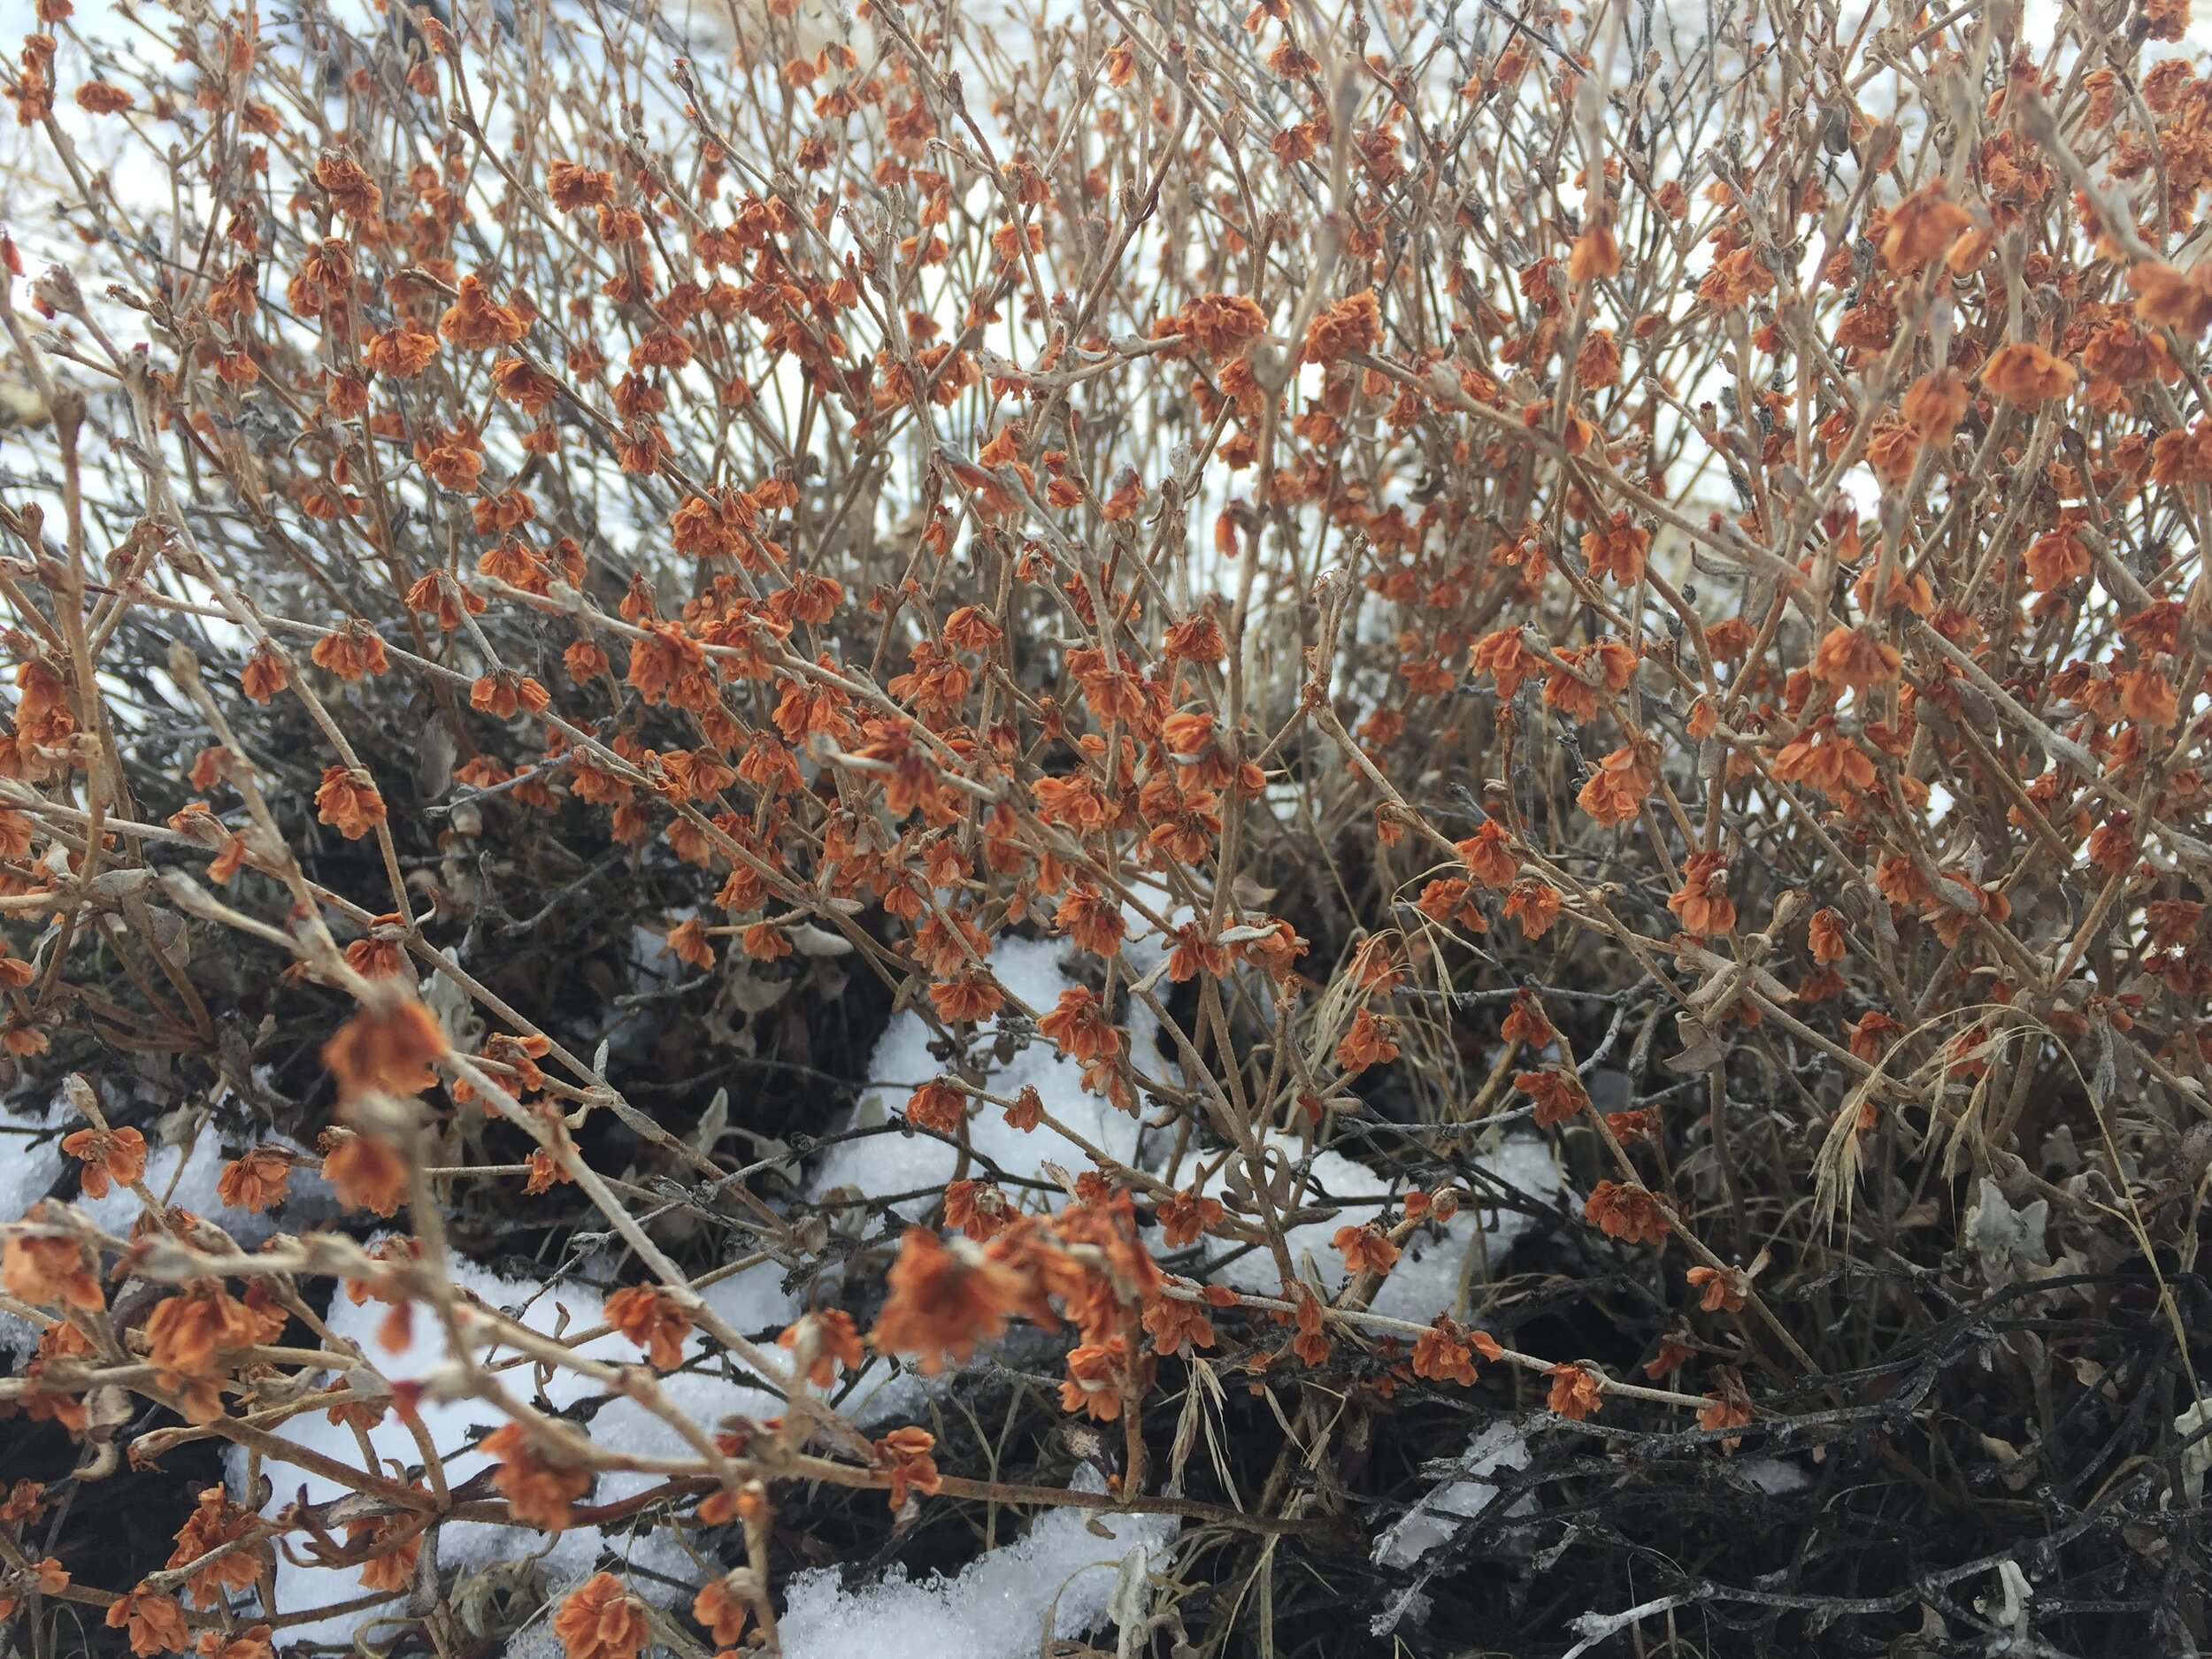 Snow Buckwheat in winter